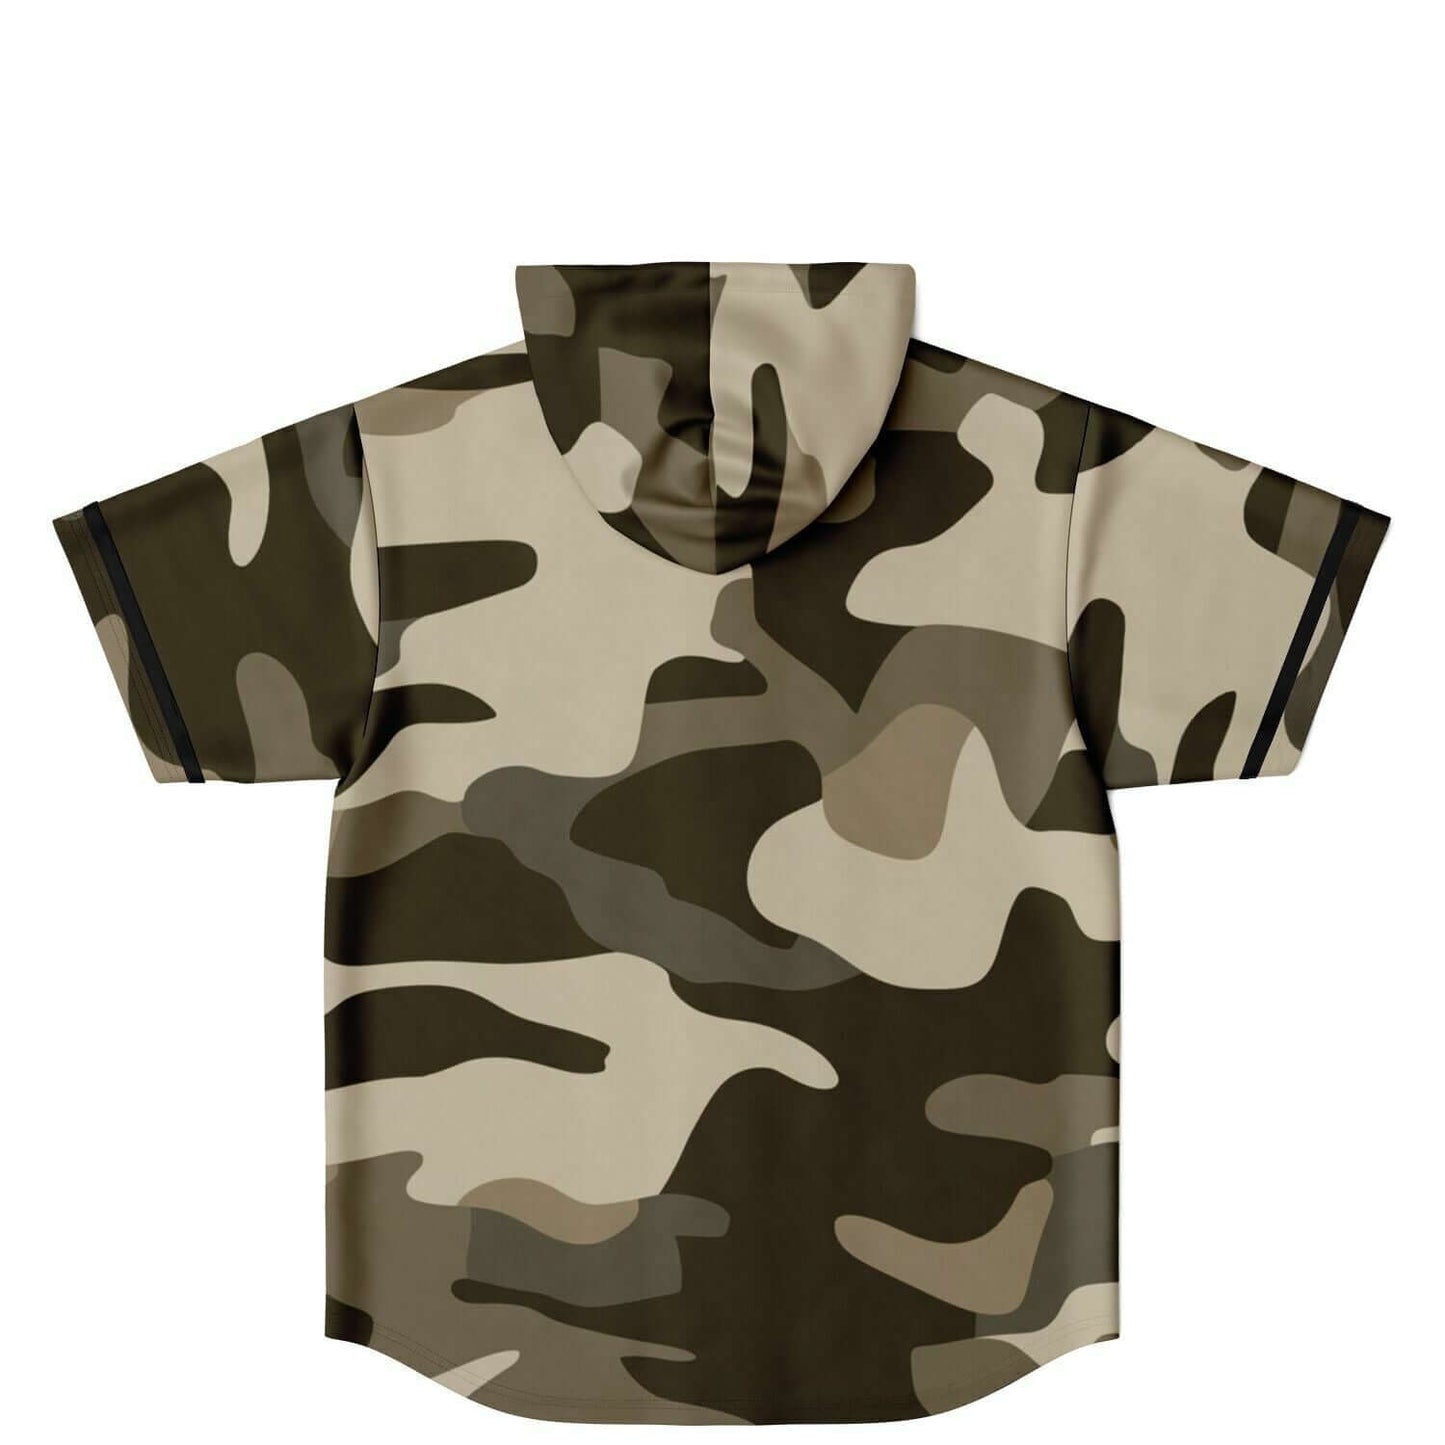 Commando Jersey Khaki | Hooded Baseball Style